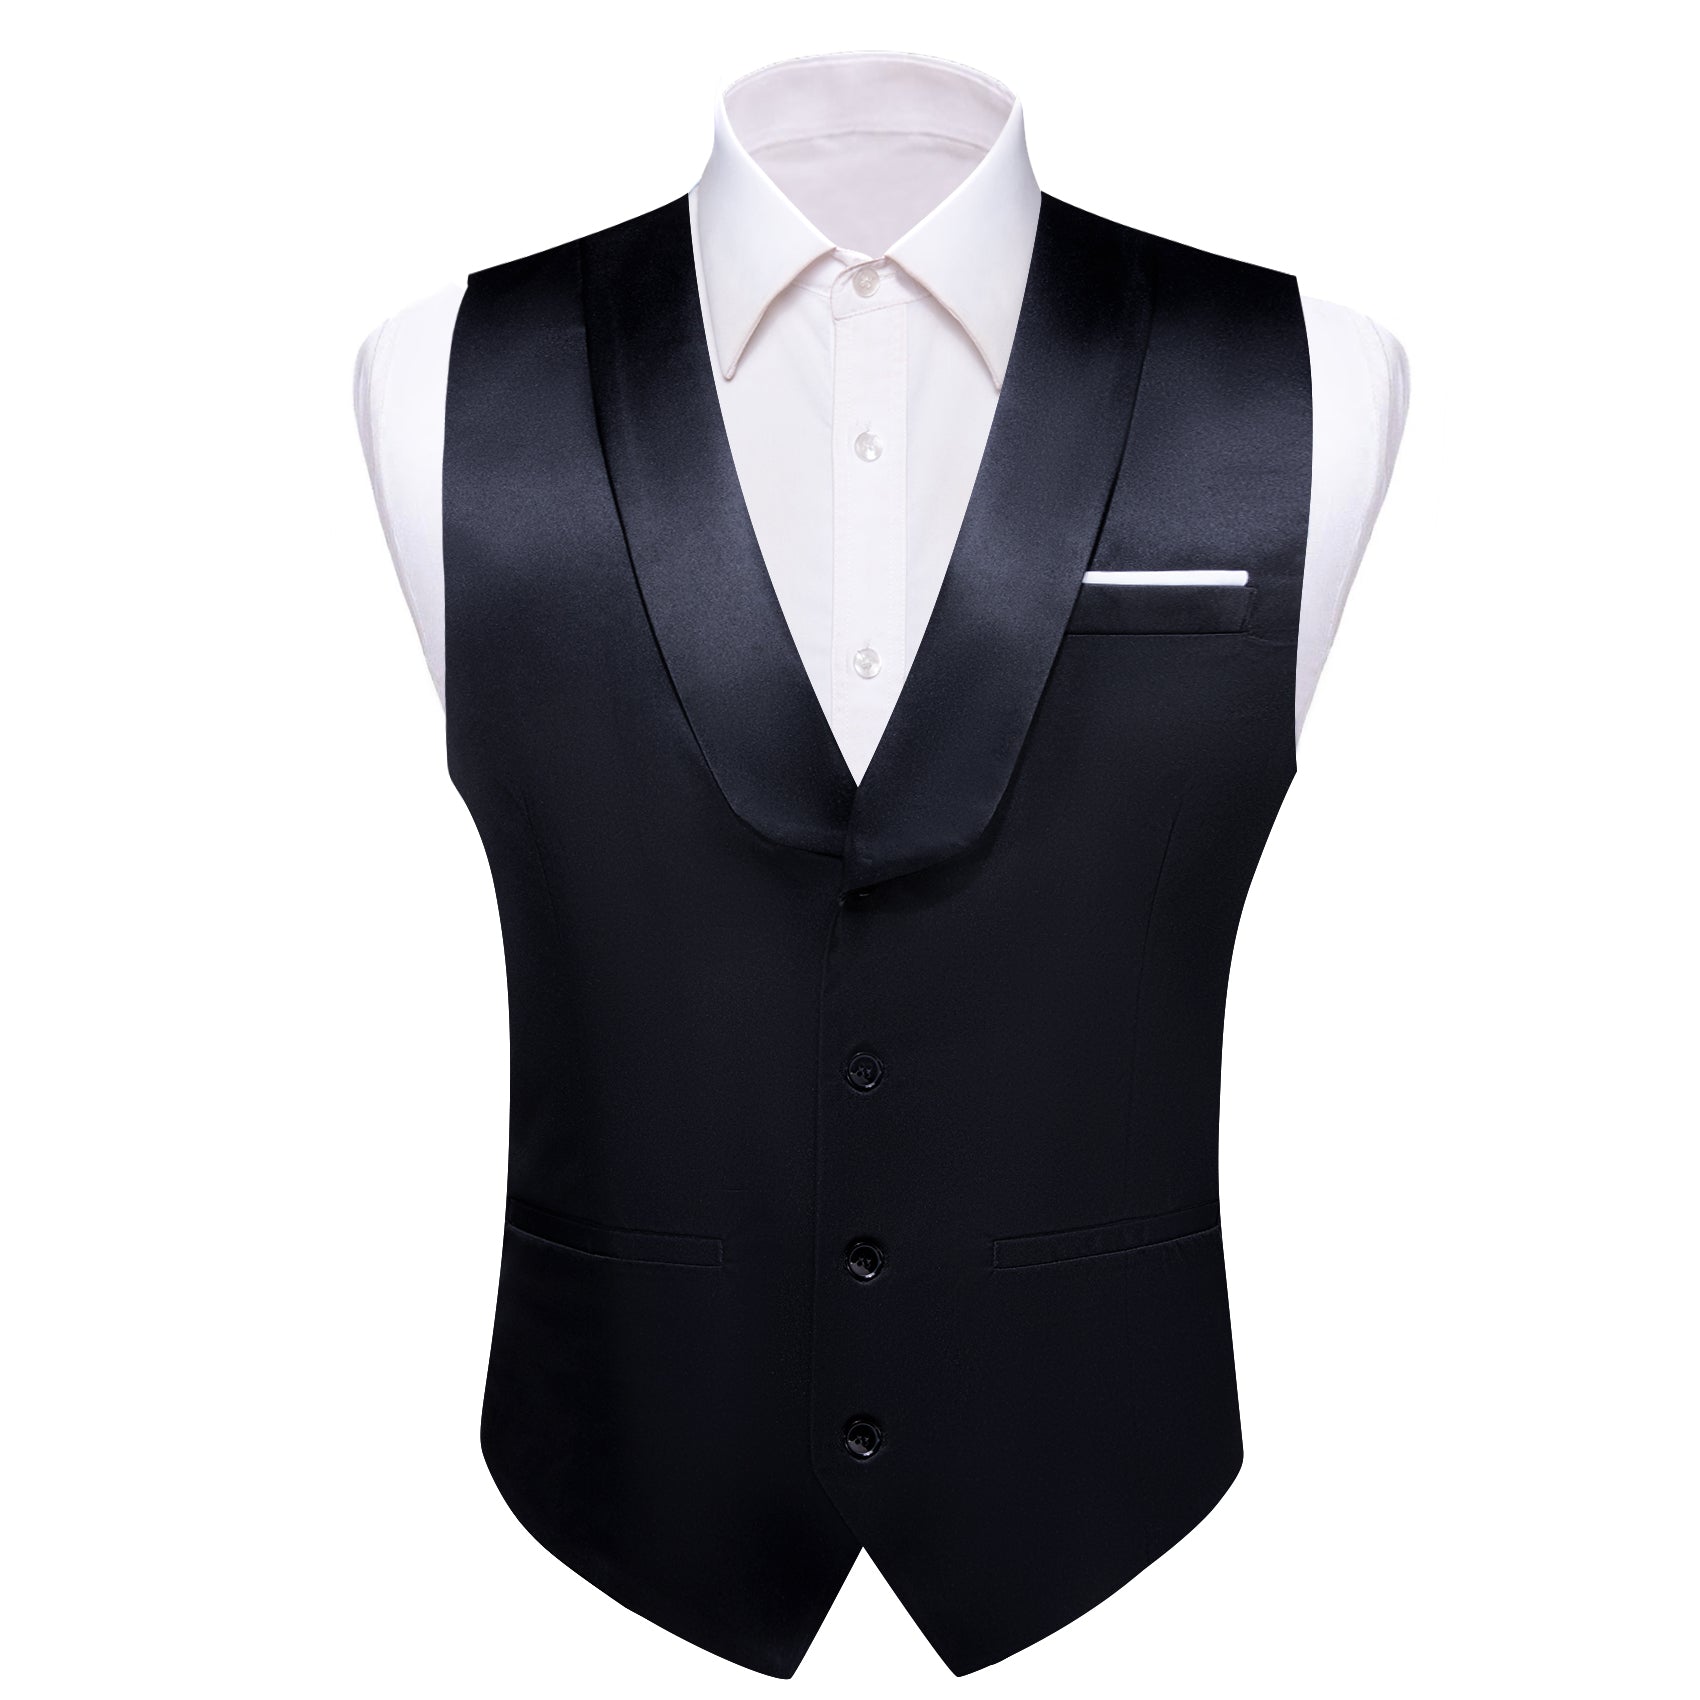 Barry.wang Novetly Black Solid Vest Waistcoat Set